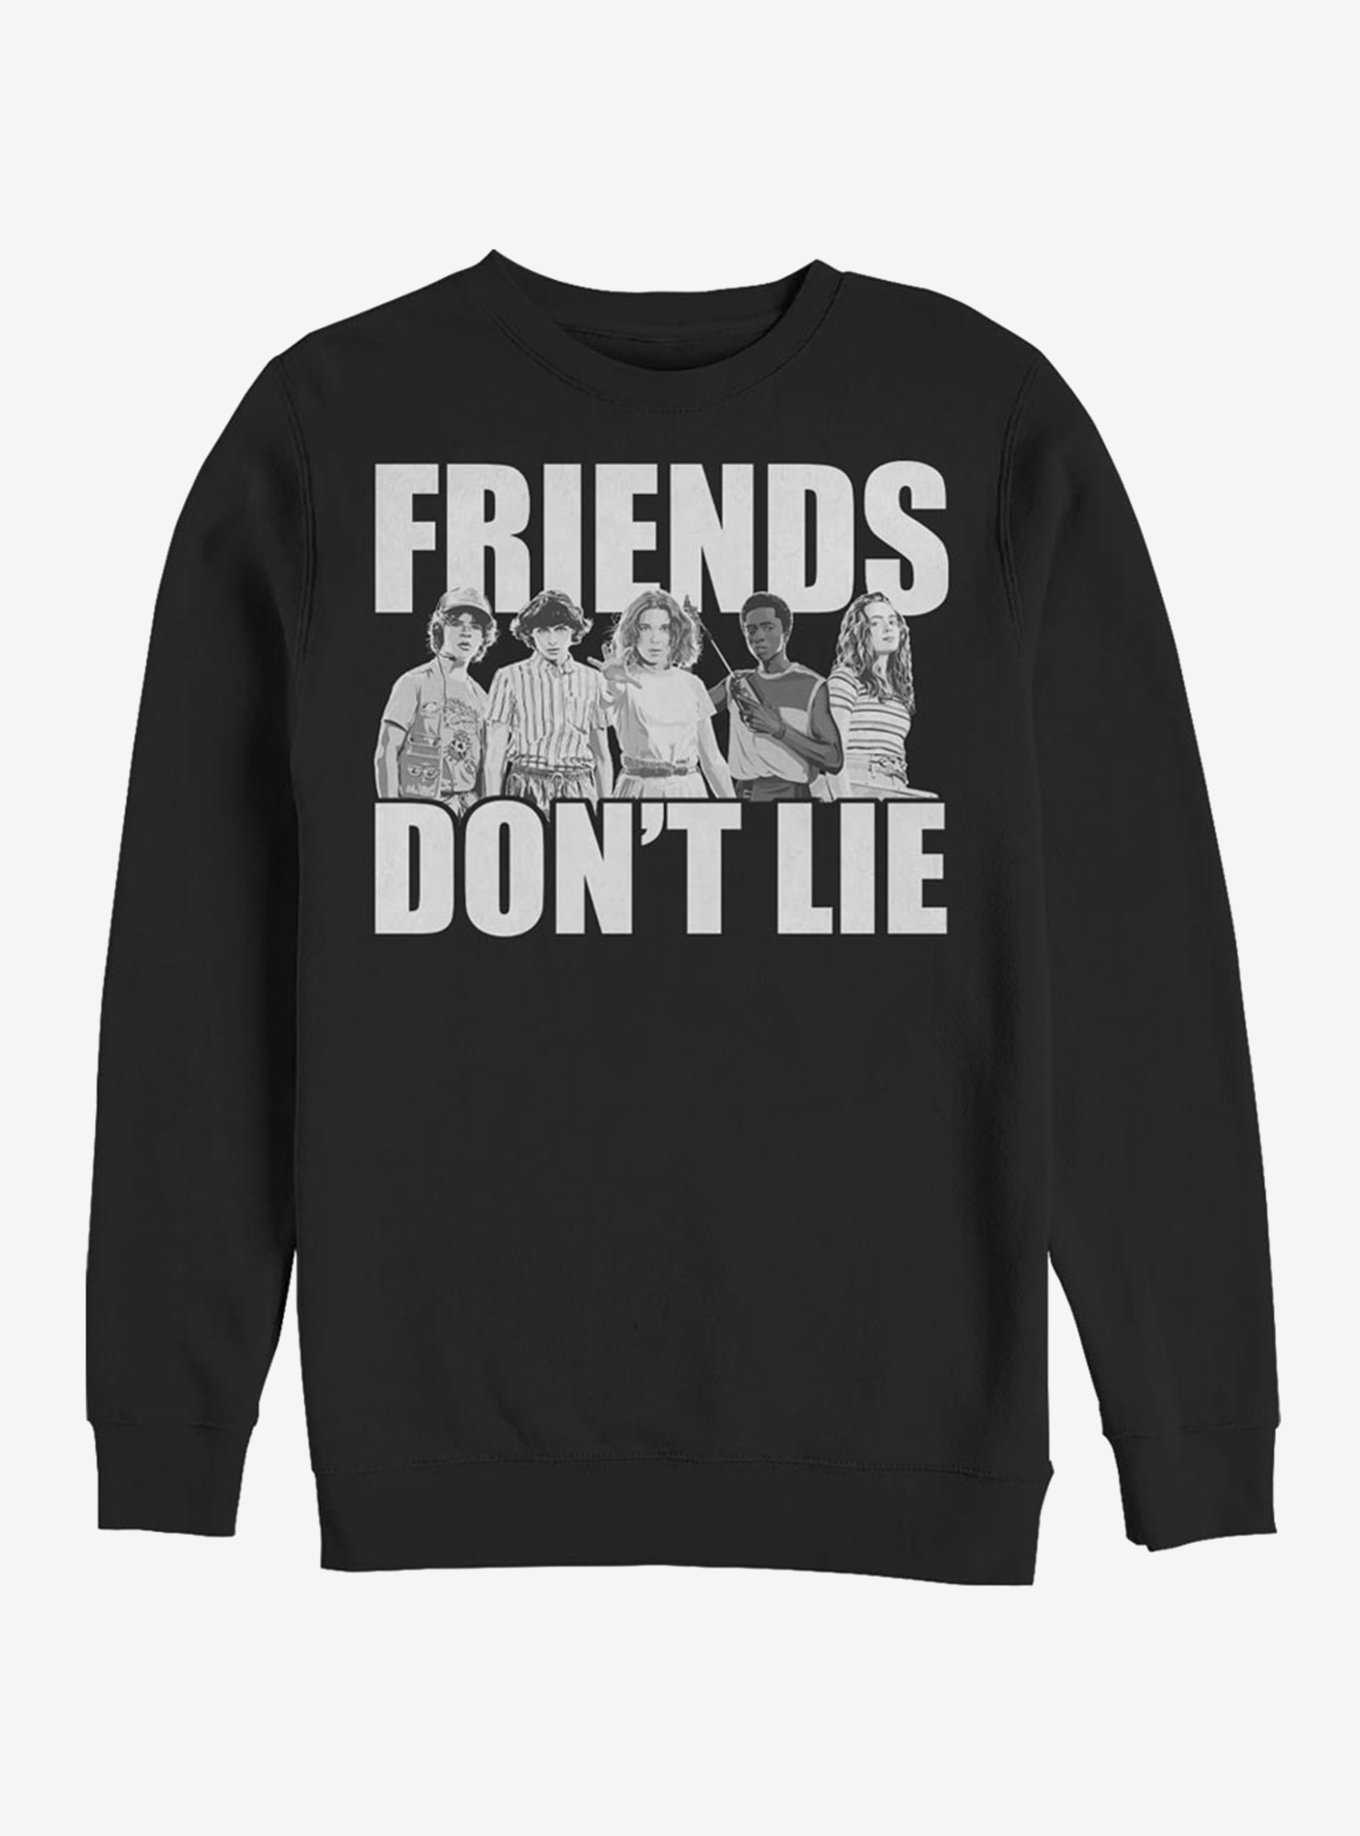 Stranger Things Cast Friends Don't Lie Crew Sweatshirt, , hi-res